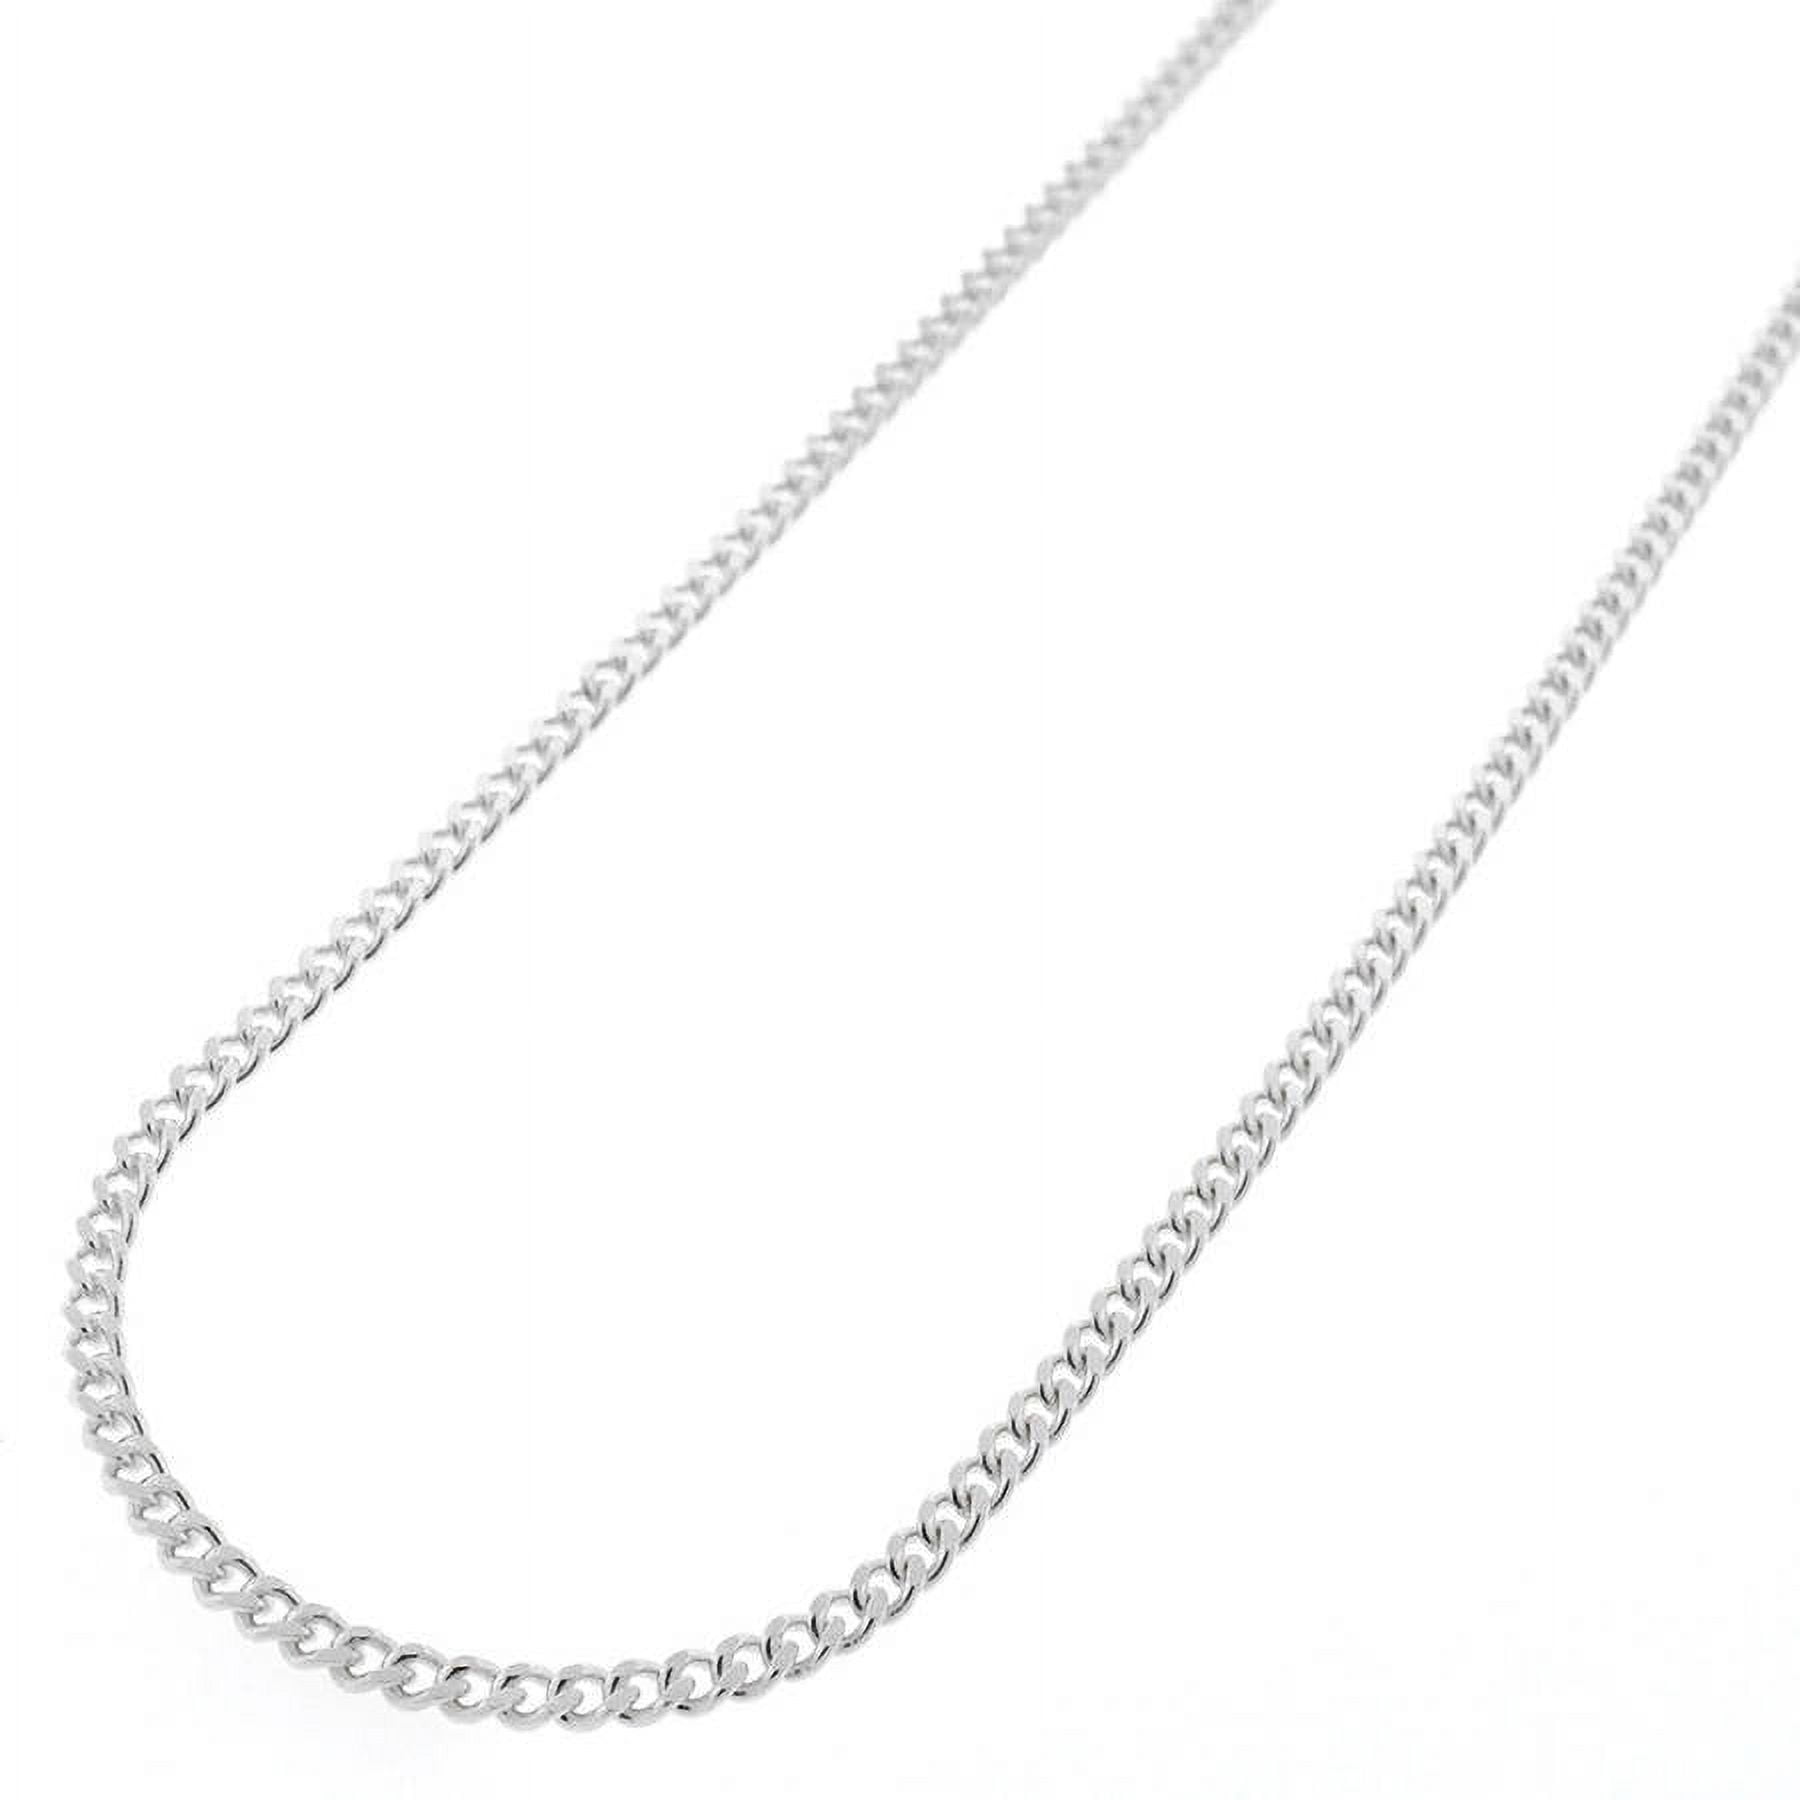 Jewlpire 925 Sterling Silver Chain Necklace Chain for Women Girls